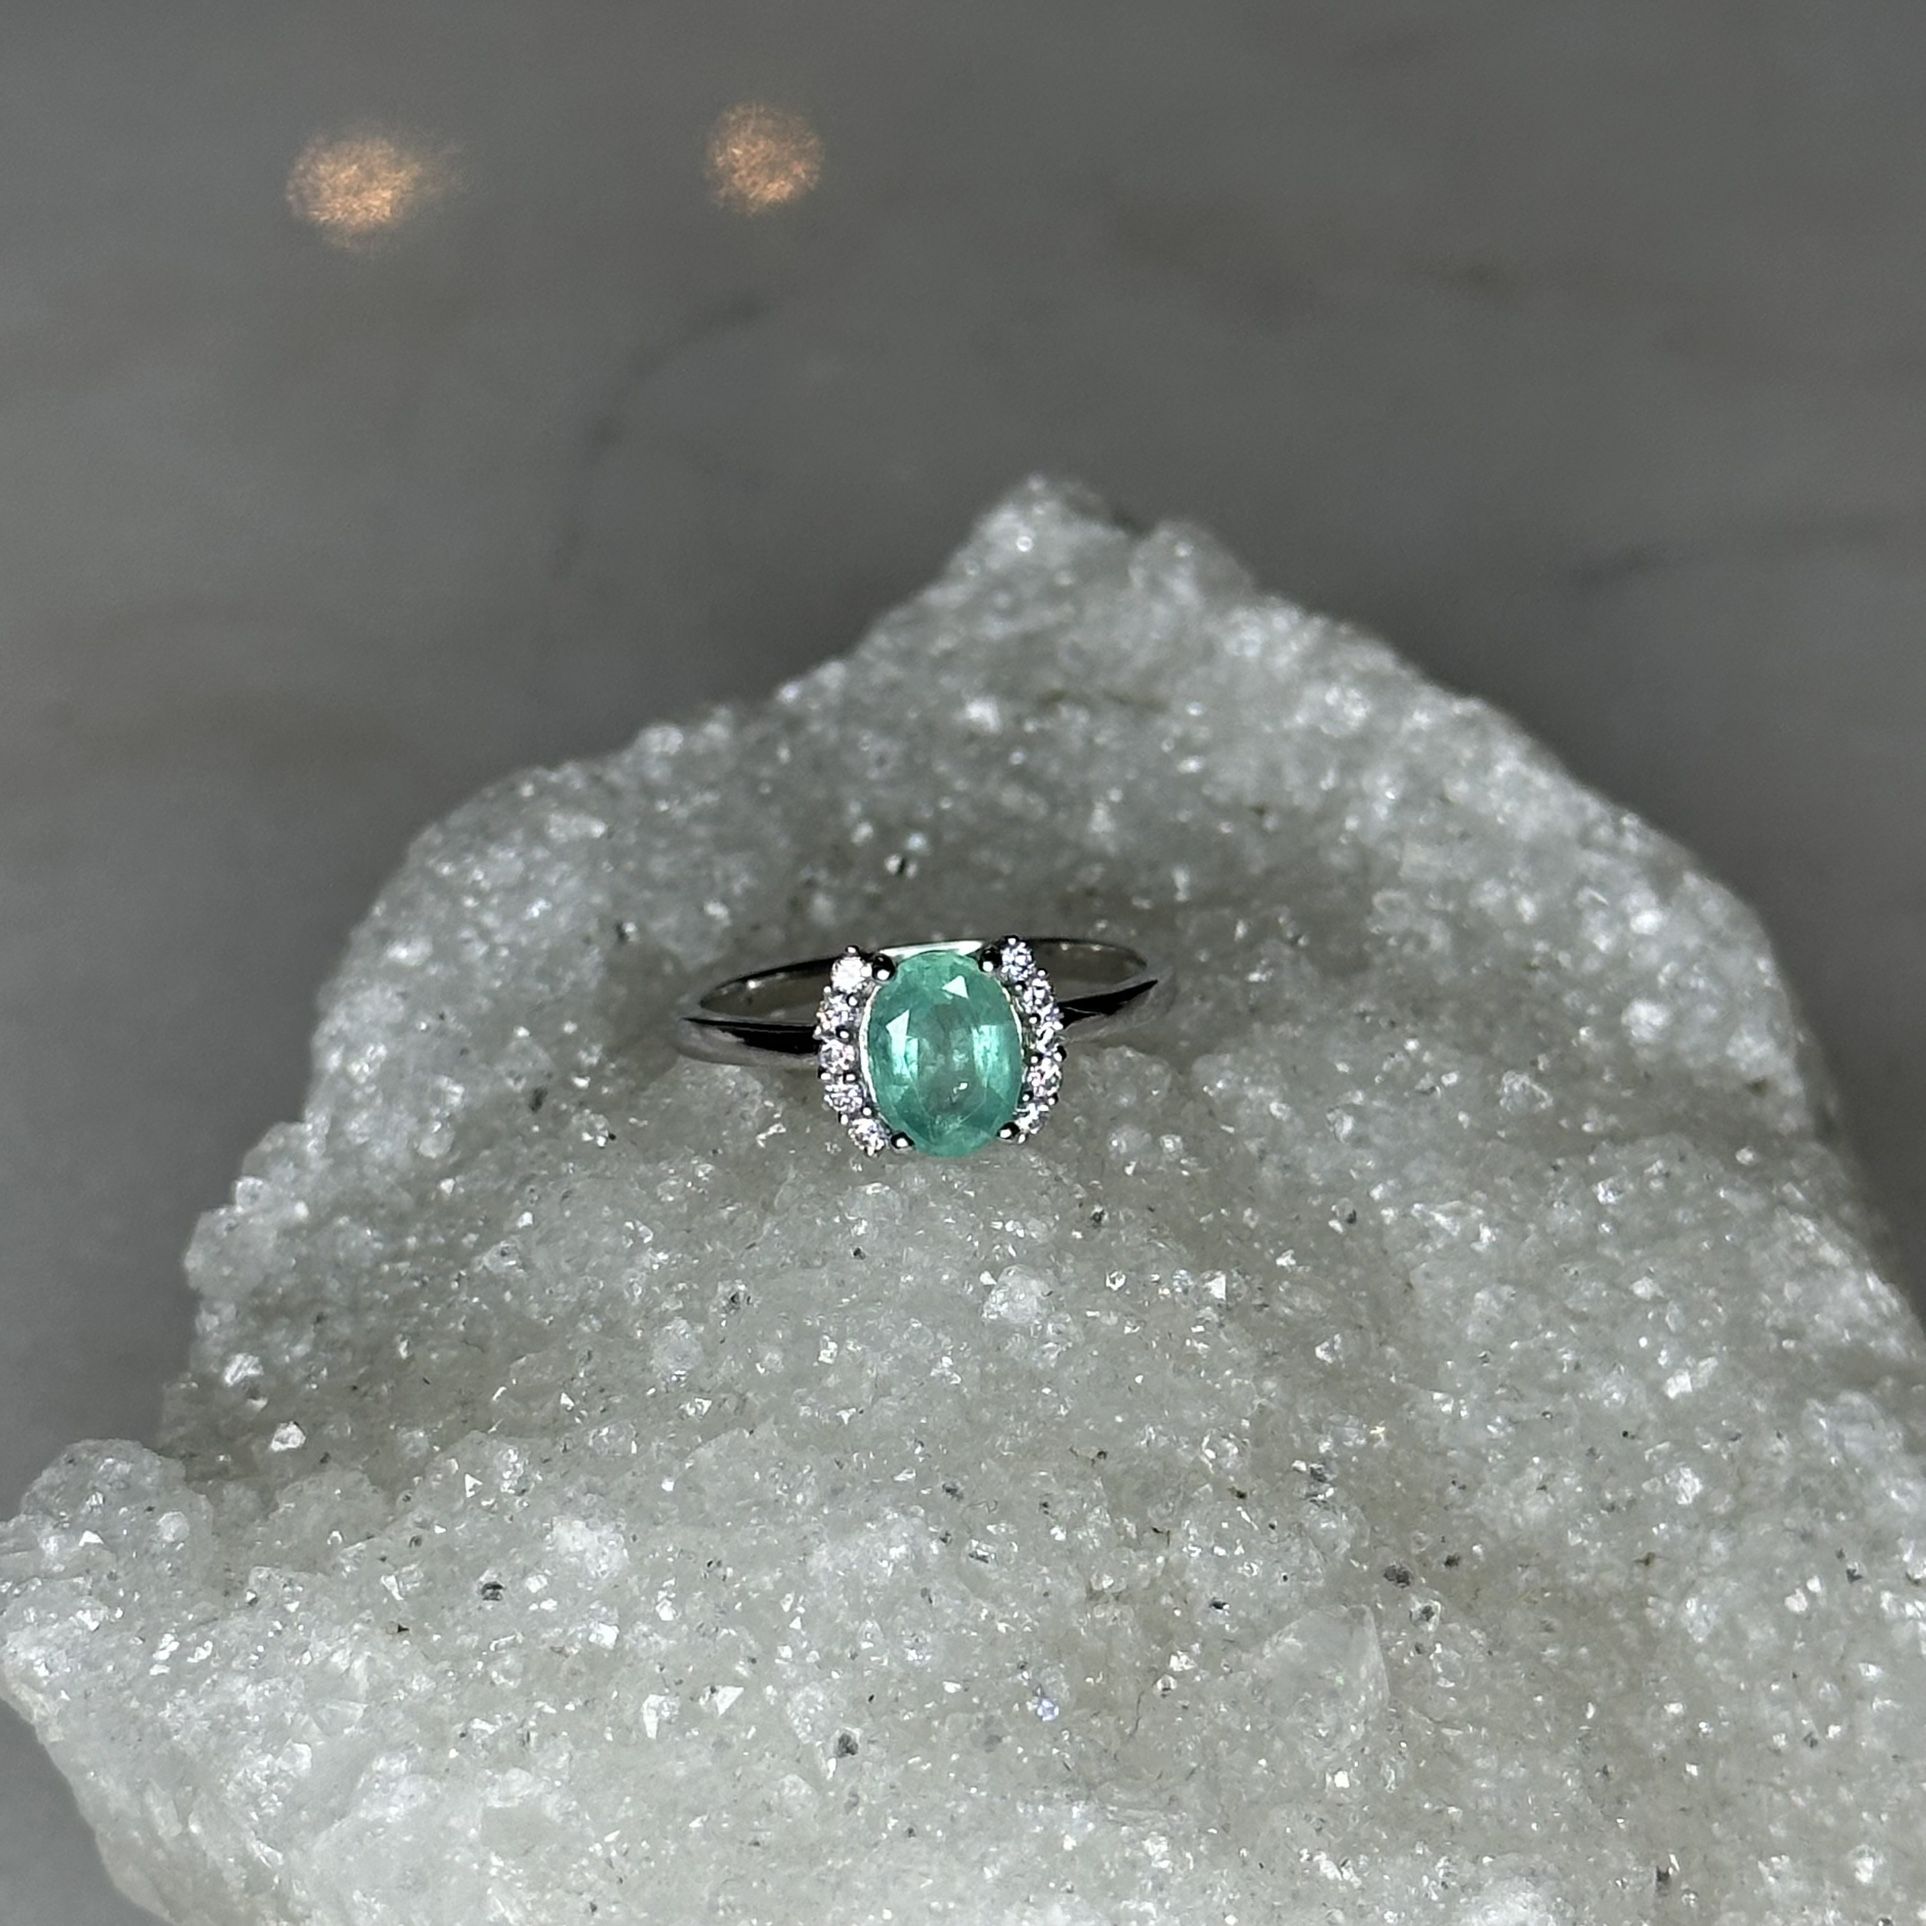 Emerald & White Topaz Ring 